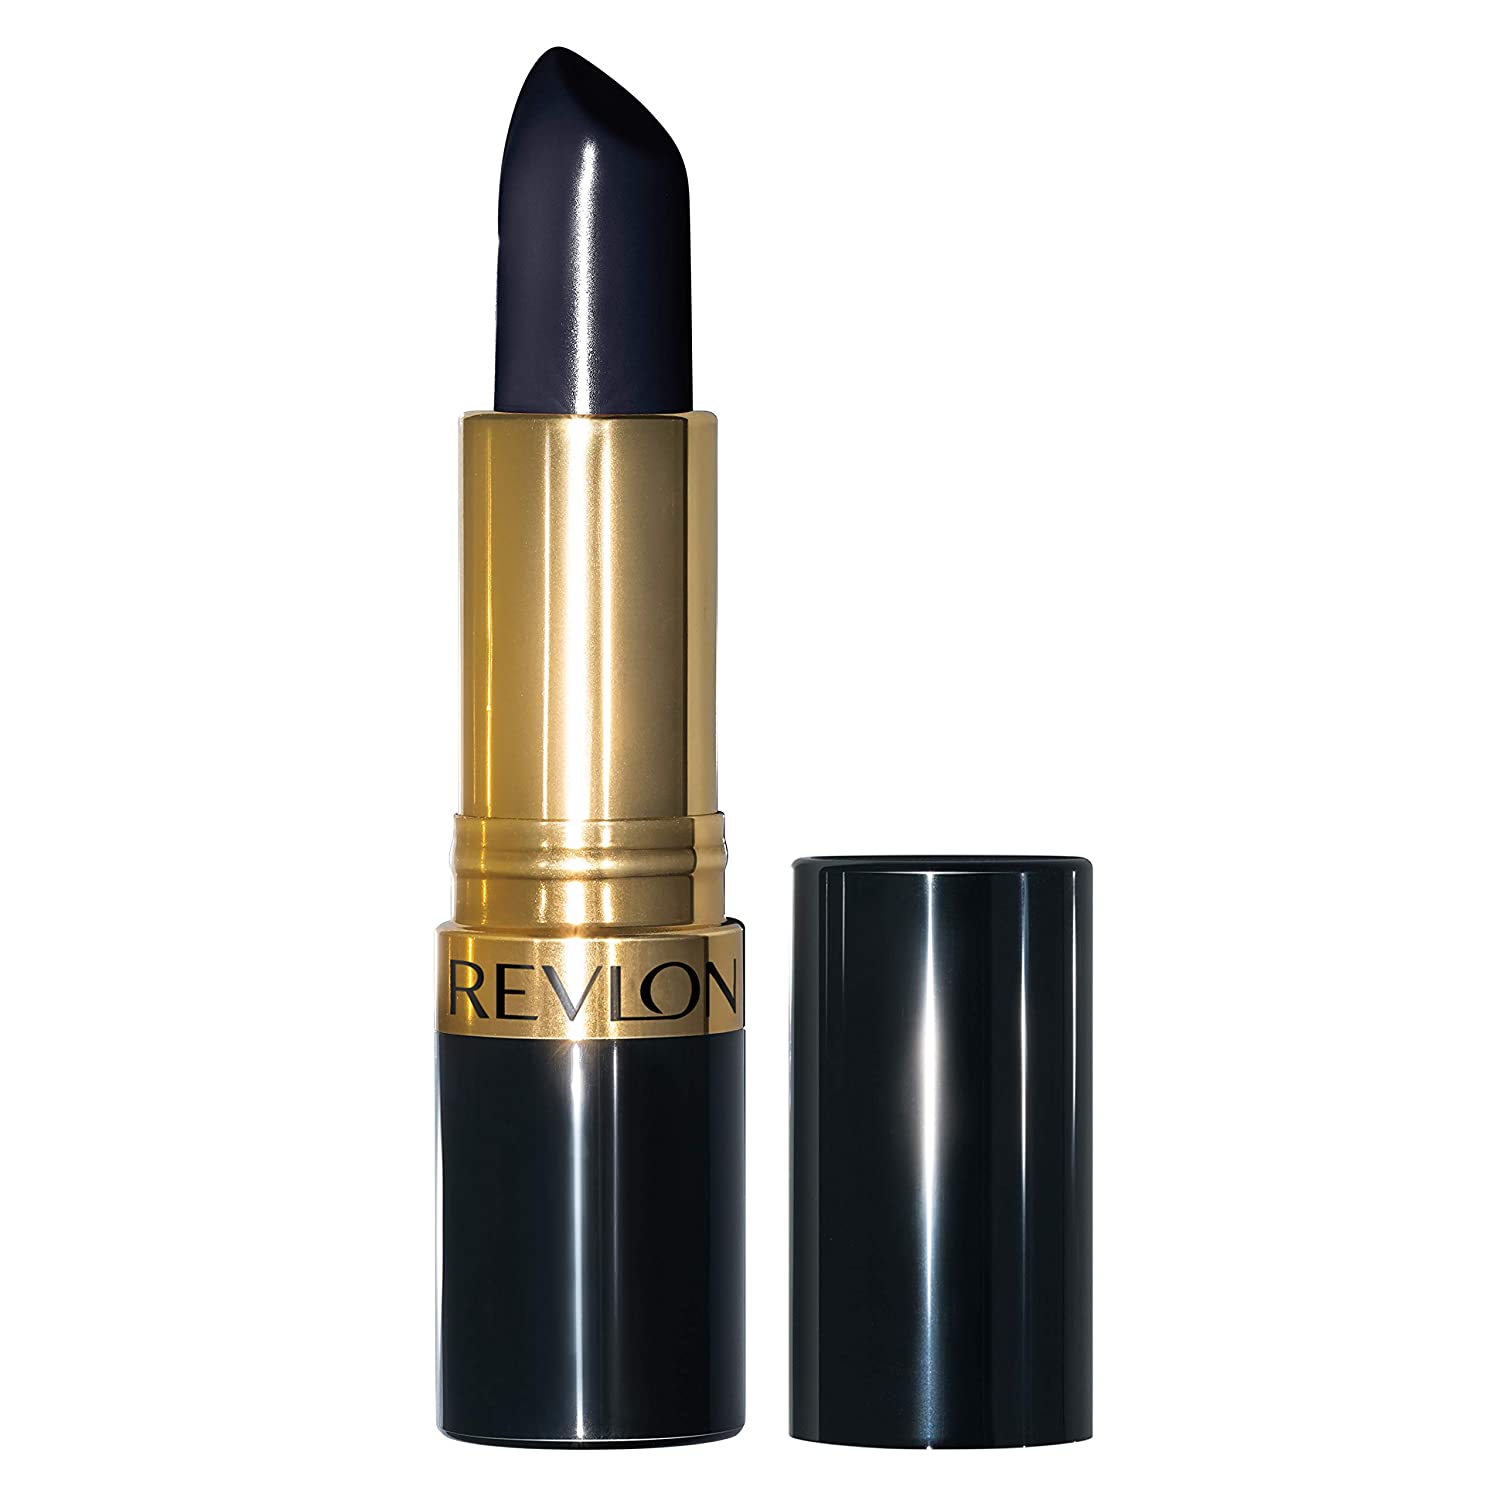 REVLON Super Lustrous Lipstick (Midnight Mystery - Blue/Black) $1.35 + Free Shipping w/ Prime or $25+